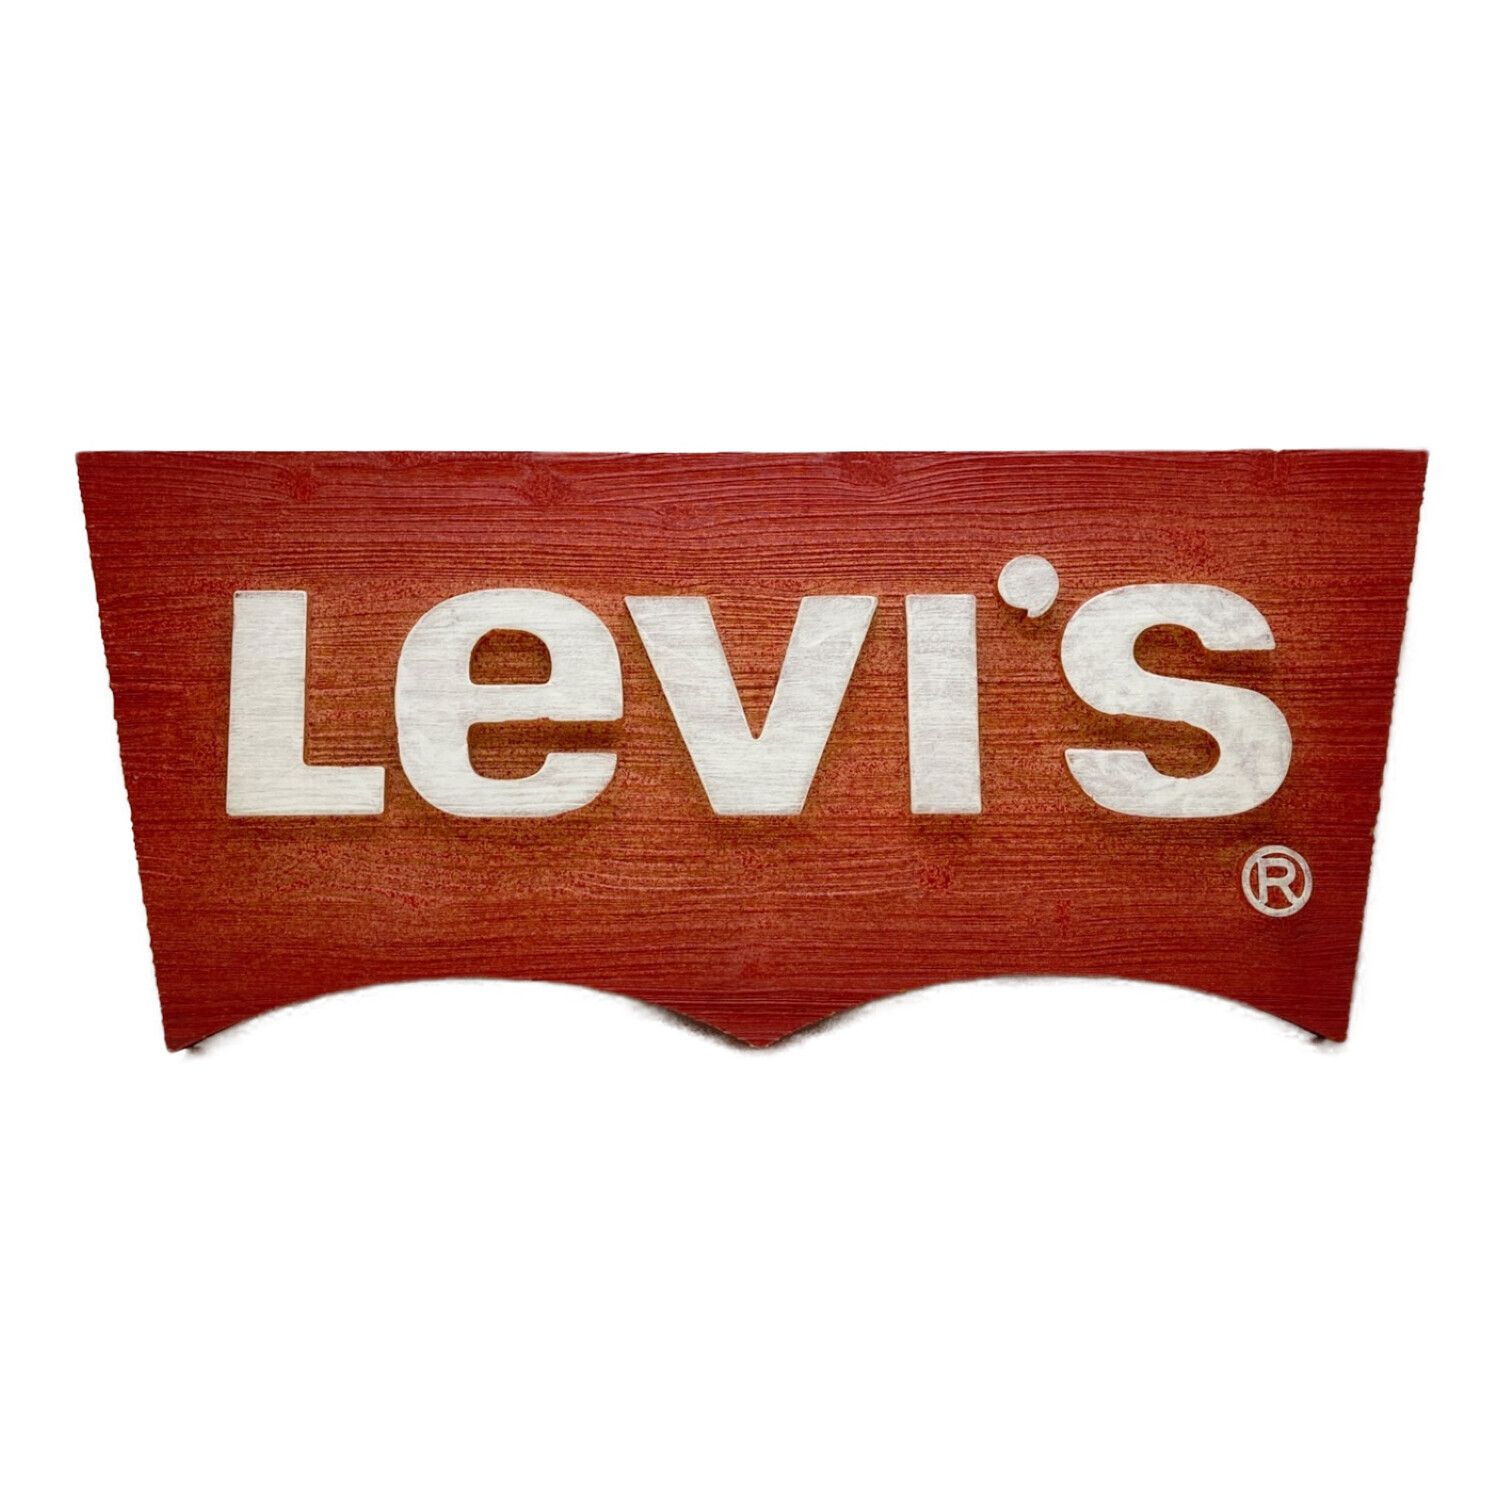 LEVI'S (リーバイス) 店頭用看板 非売品 店舗什器やインテリアなどに